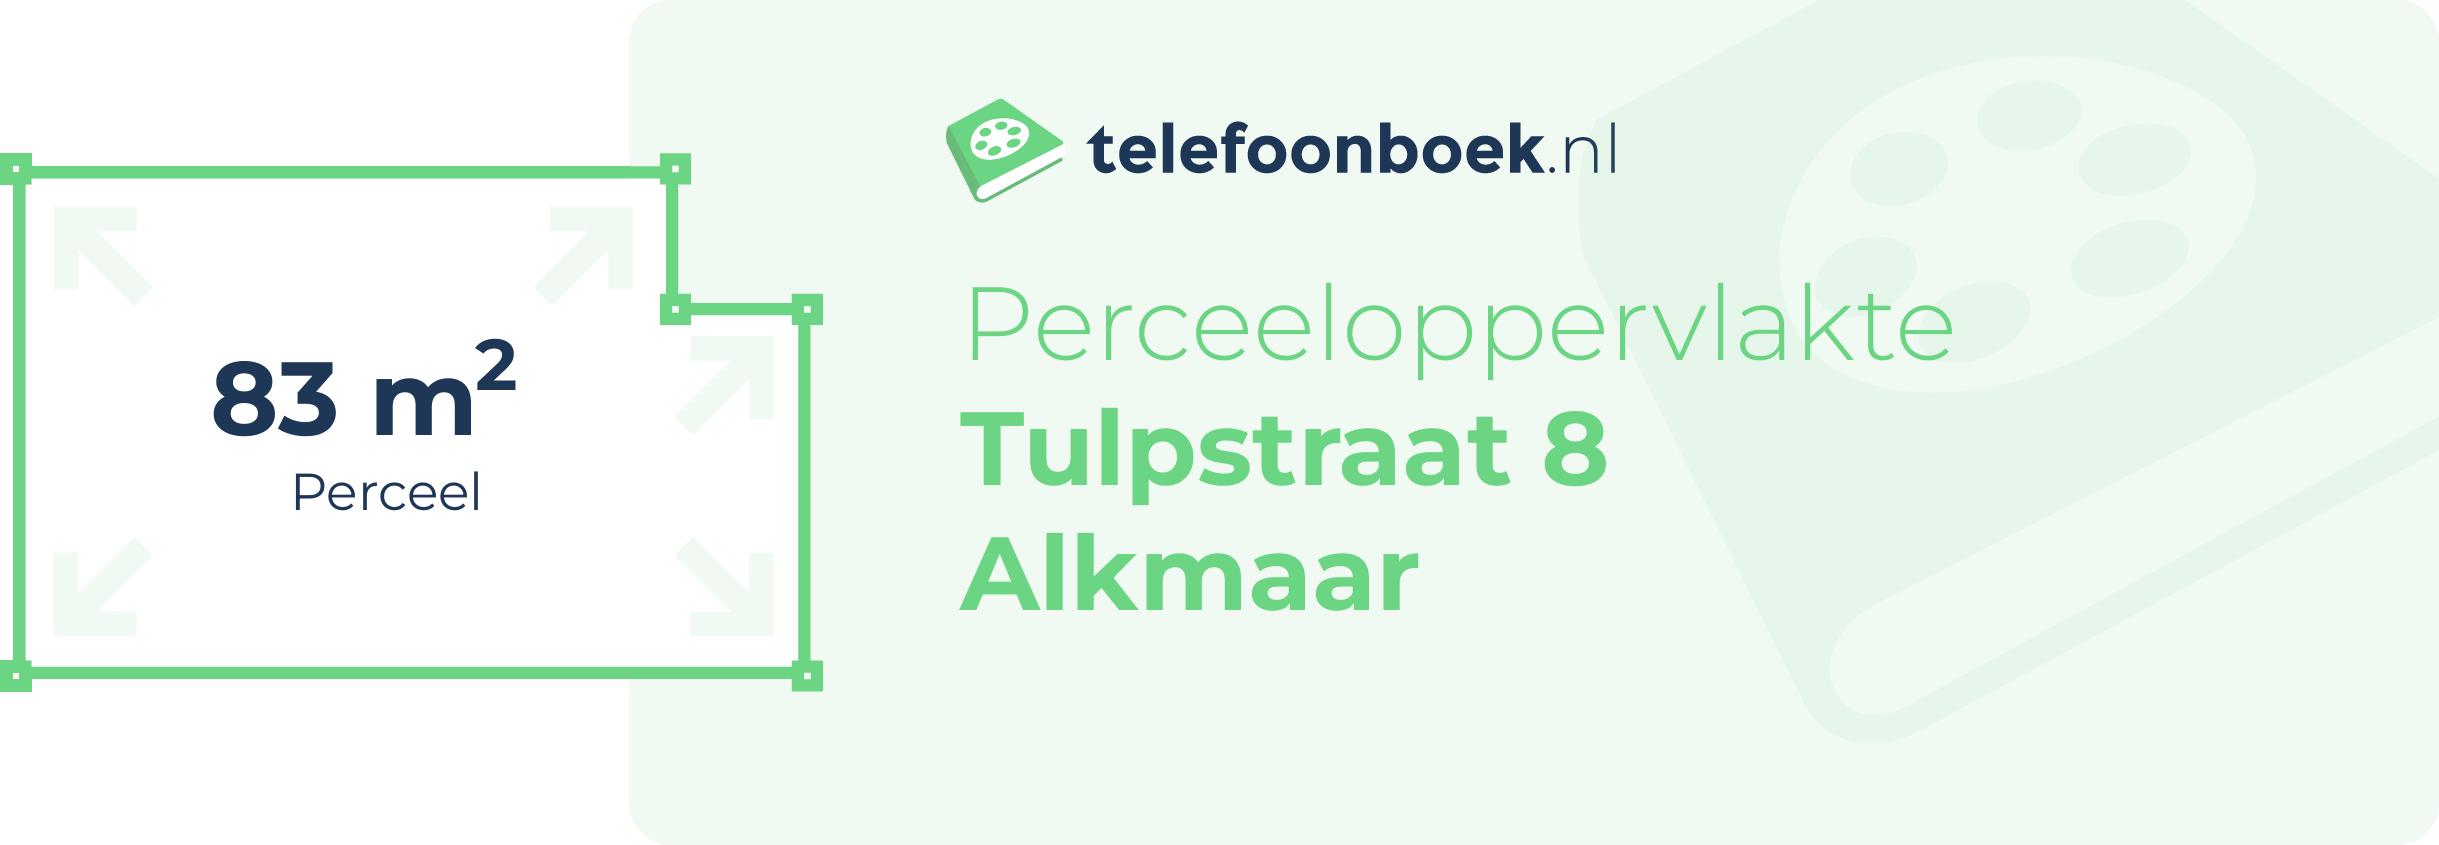 Perceeloppervlakte Tulpstraat 8 Alkmaar